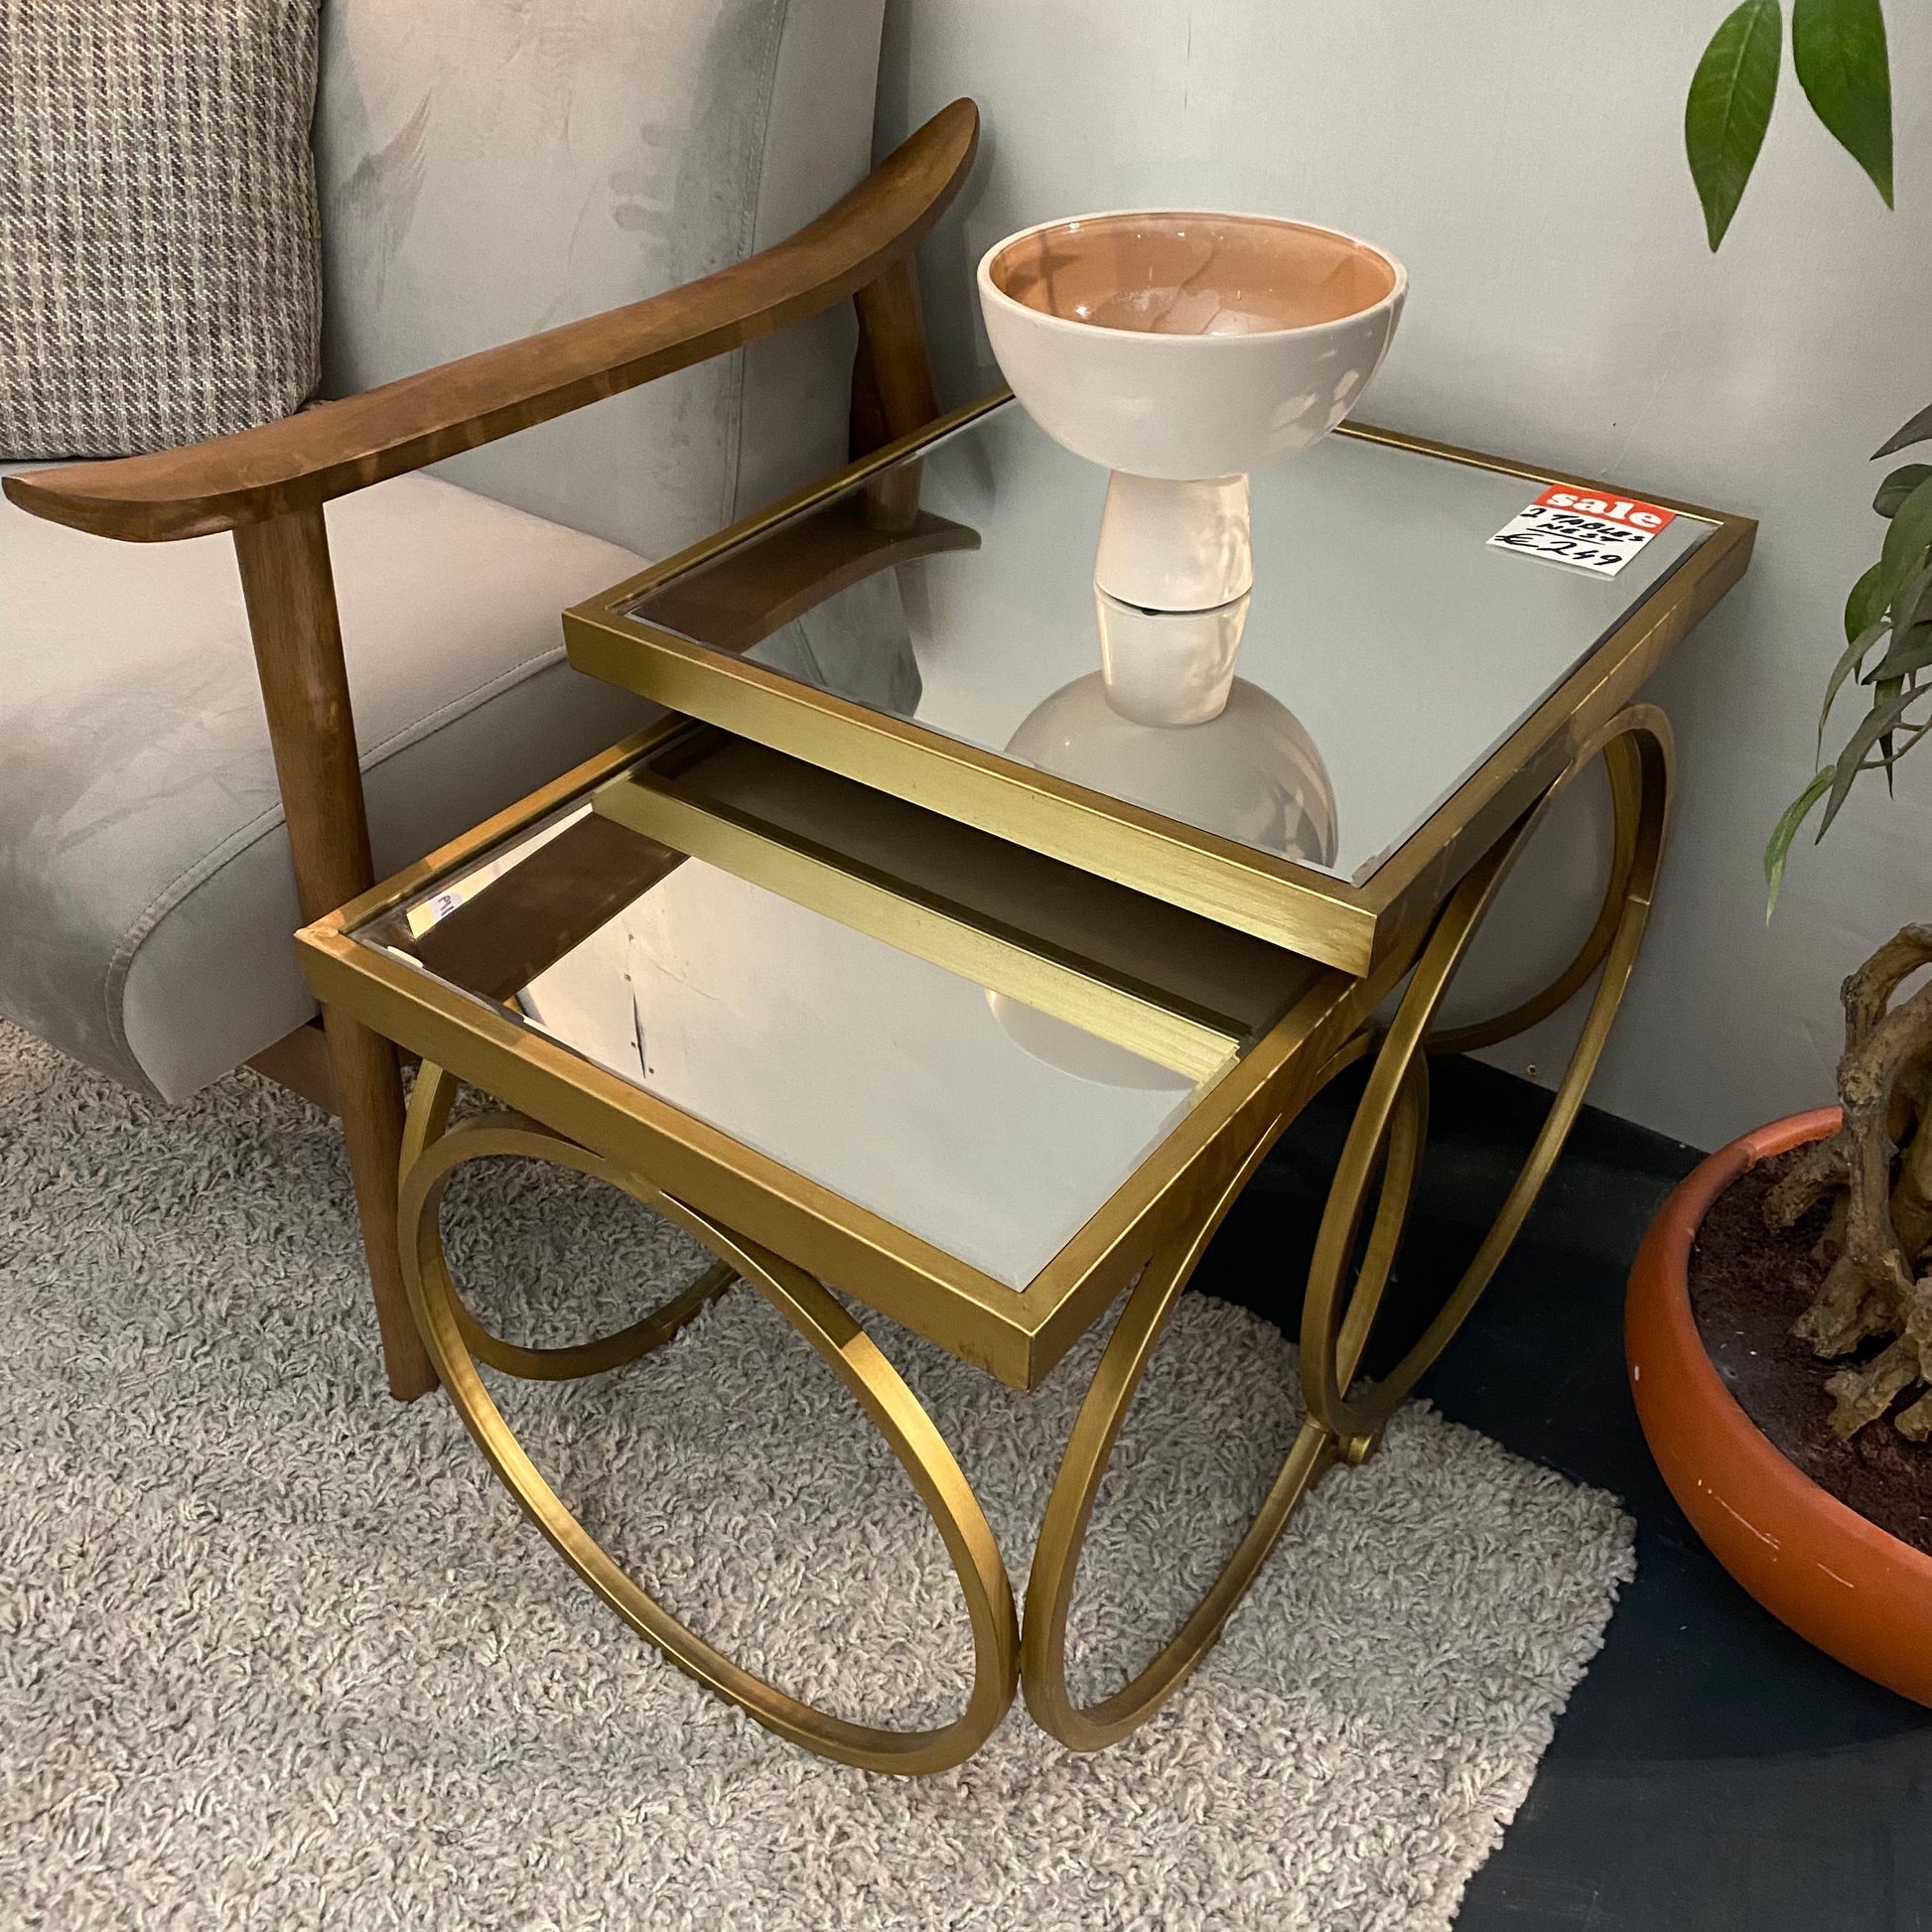 Winston Nest of Tables Gold - Luxury Interiors